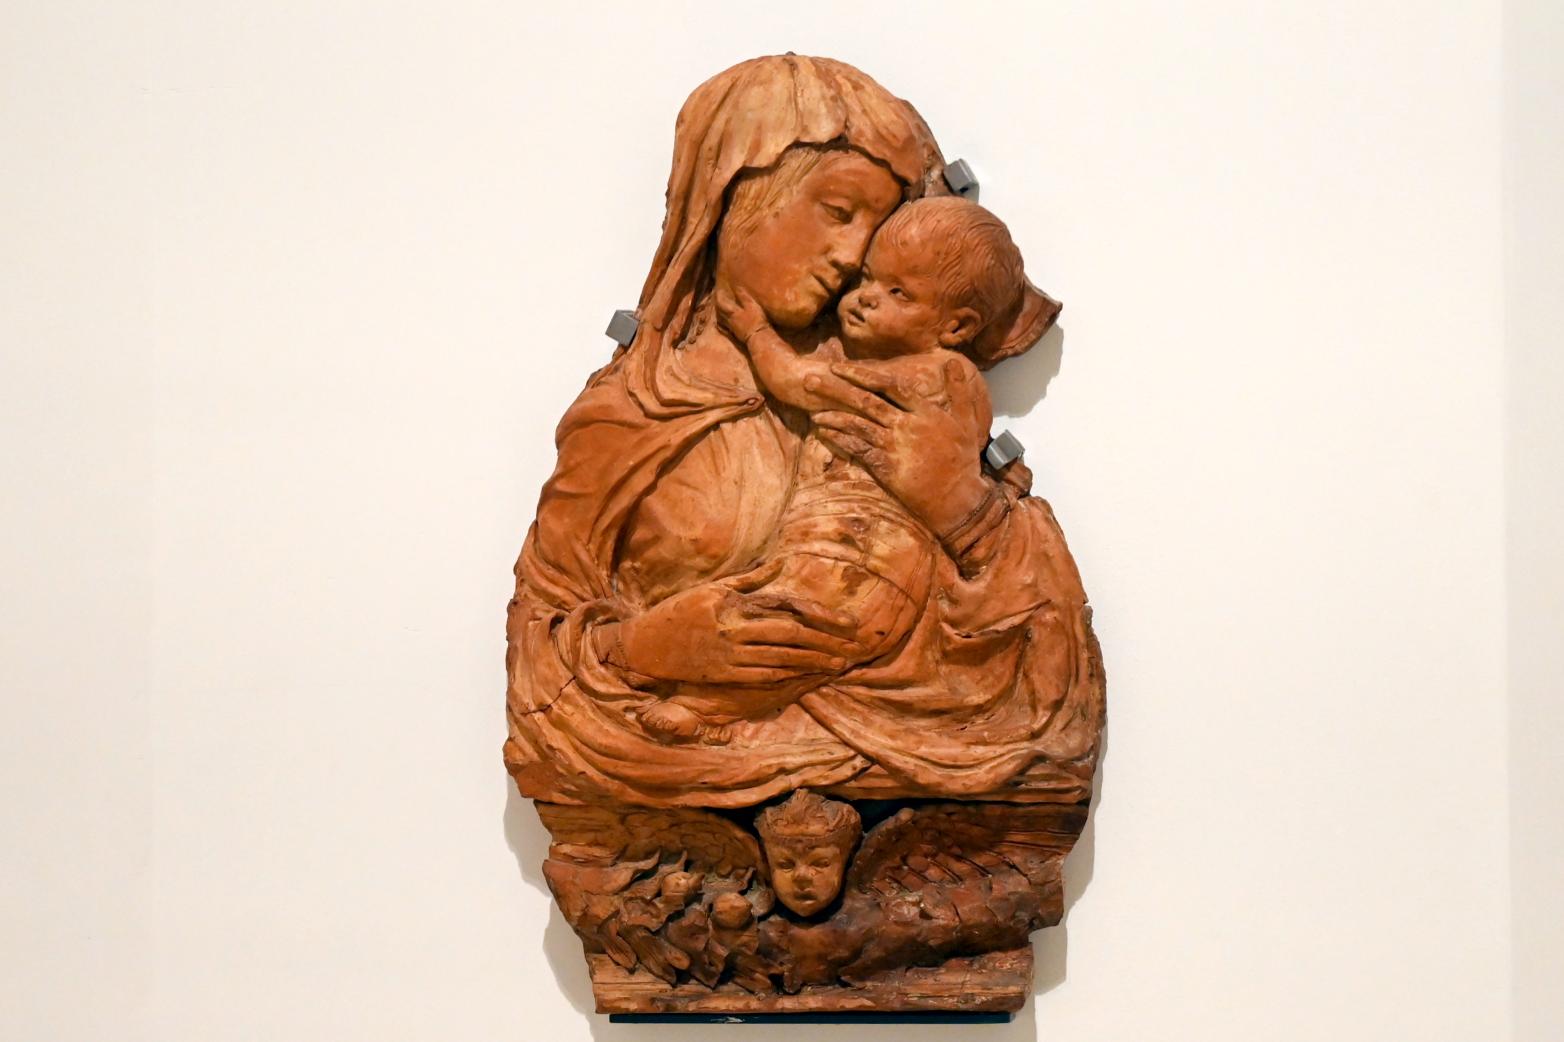 Maria mit Kind, London, Victoria and Albert Museum, 1. Etage, um 1450–1475